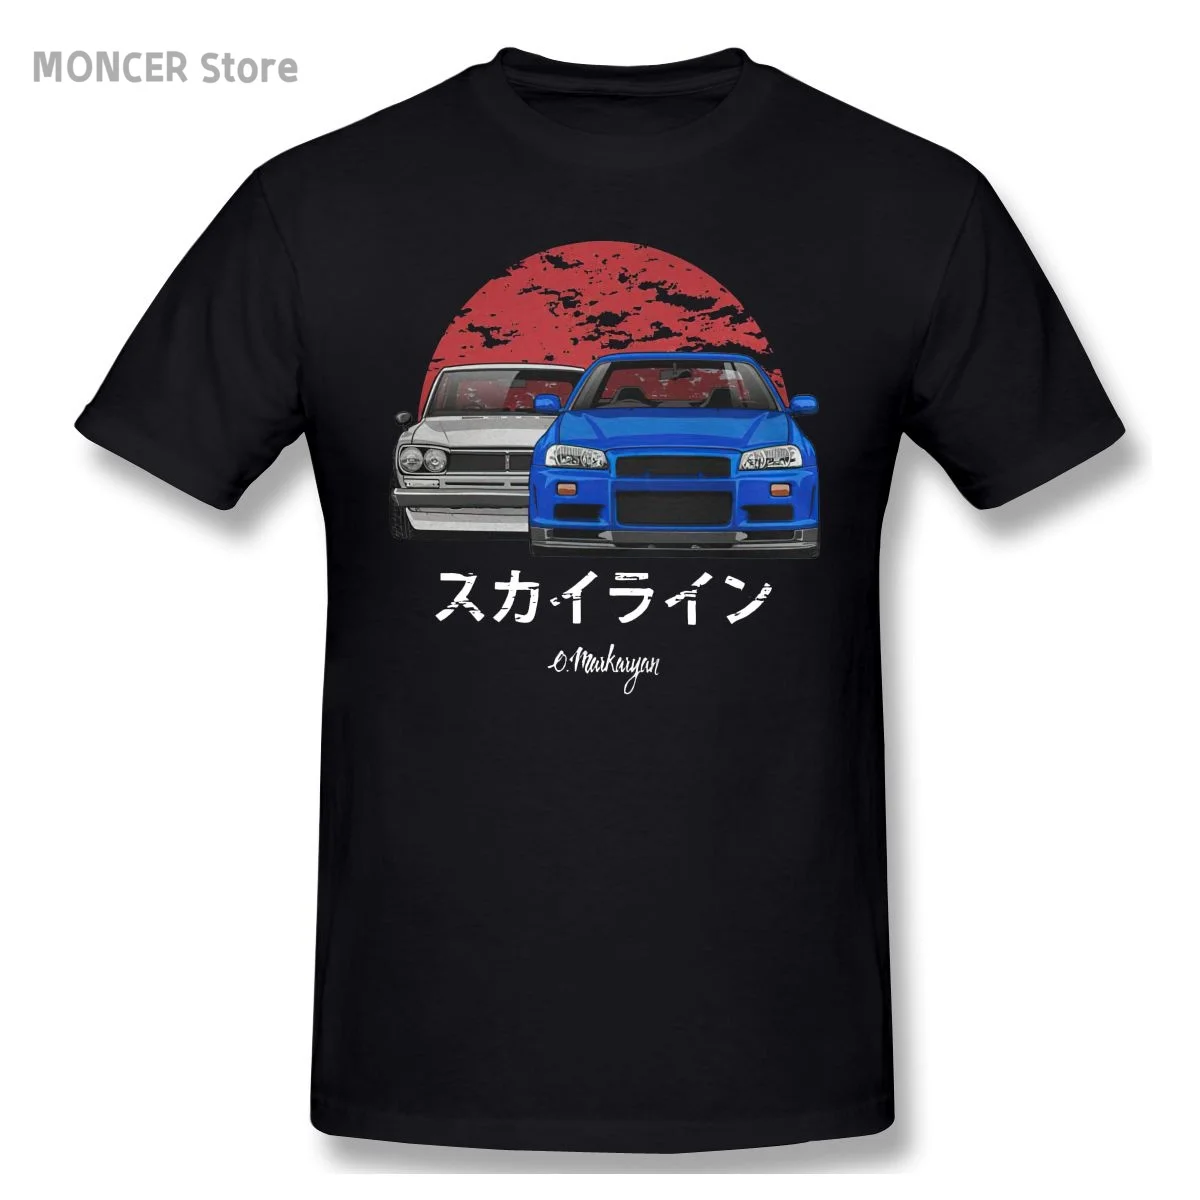 

Skyline R34 Hakosuka Jdm T Shirts For Men 100% Cotton Crazy T-Shirts Round Collar Car Automotive Tee Shirt Clothes Gift Idea